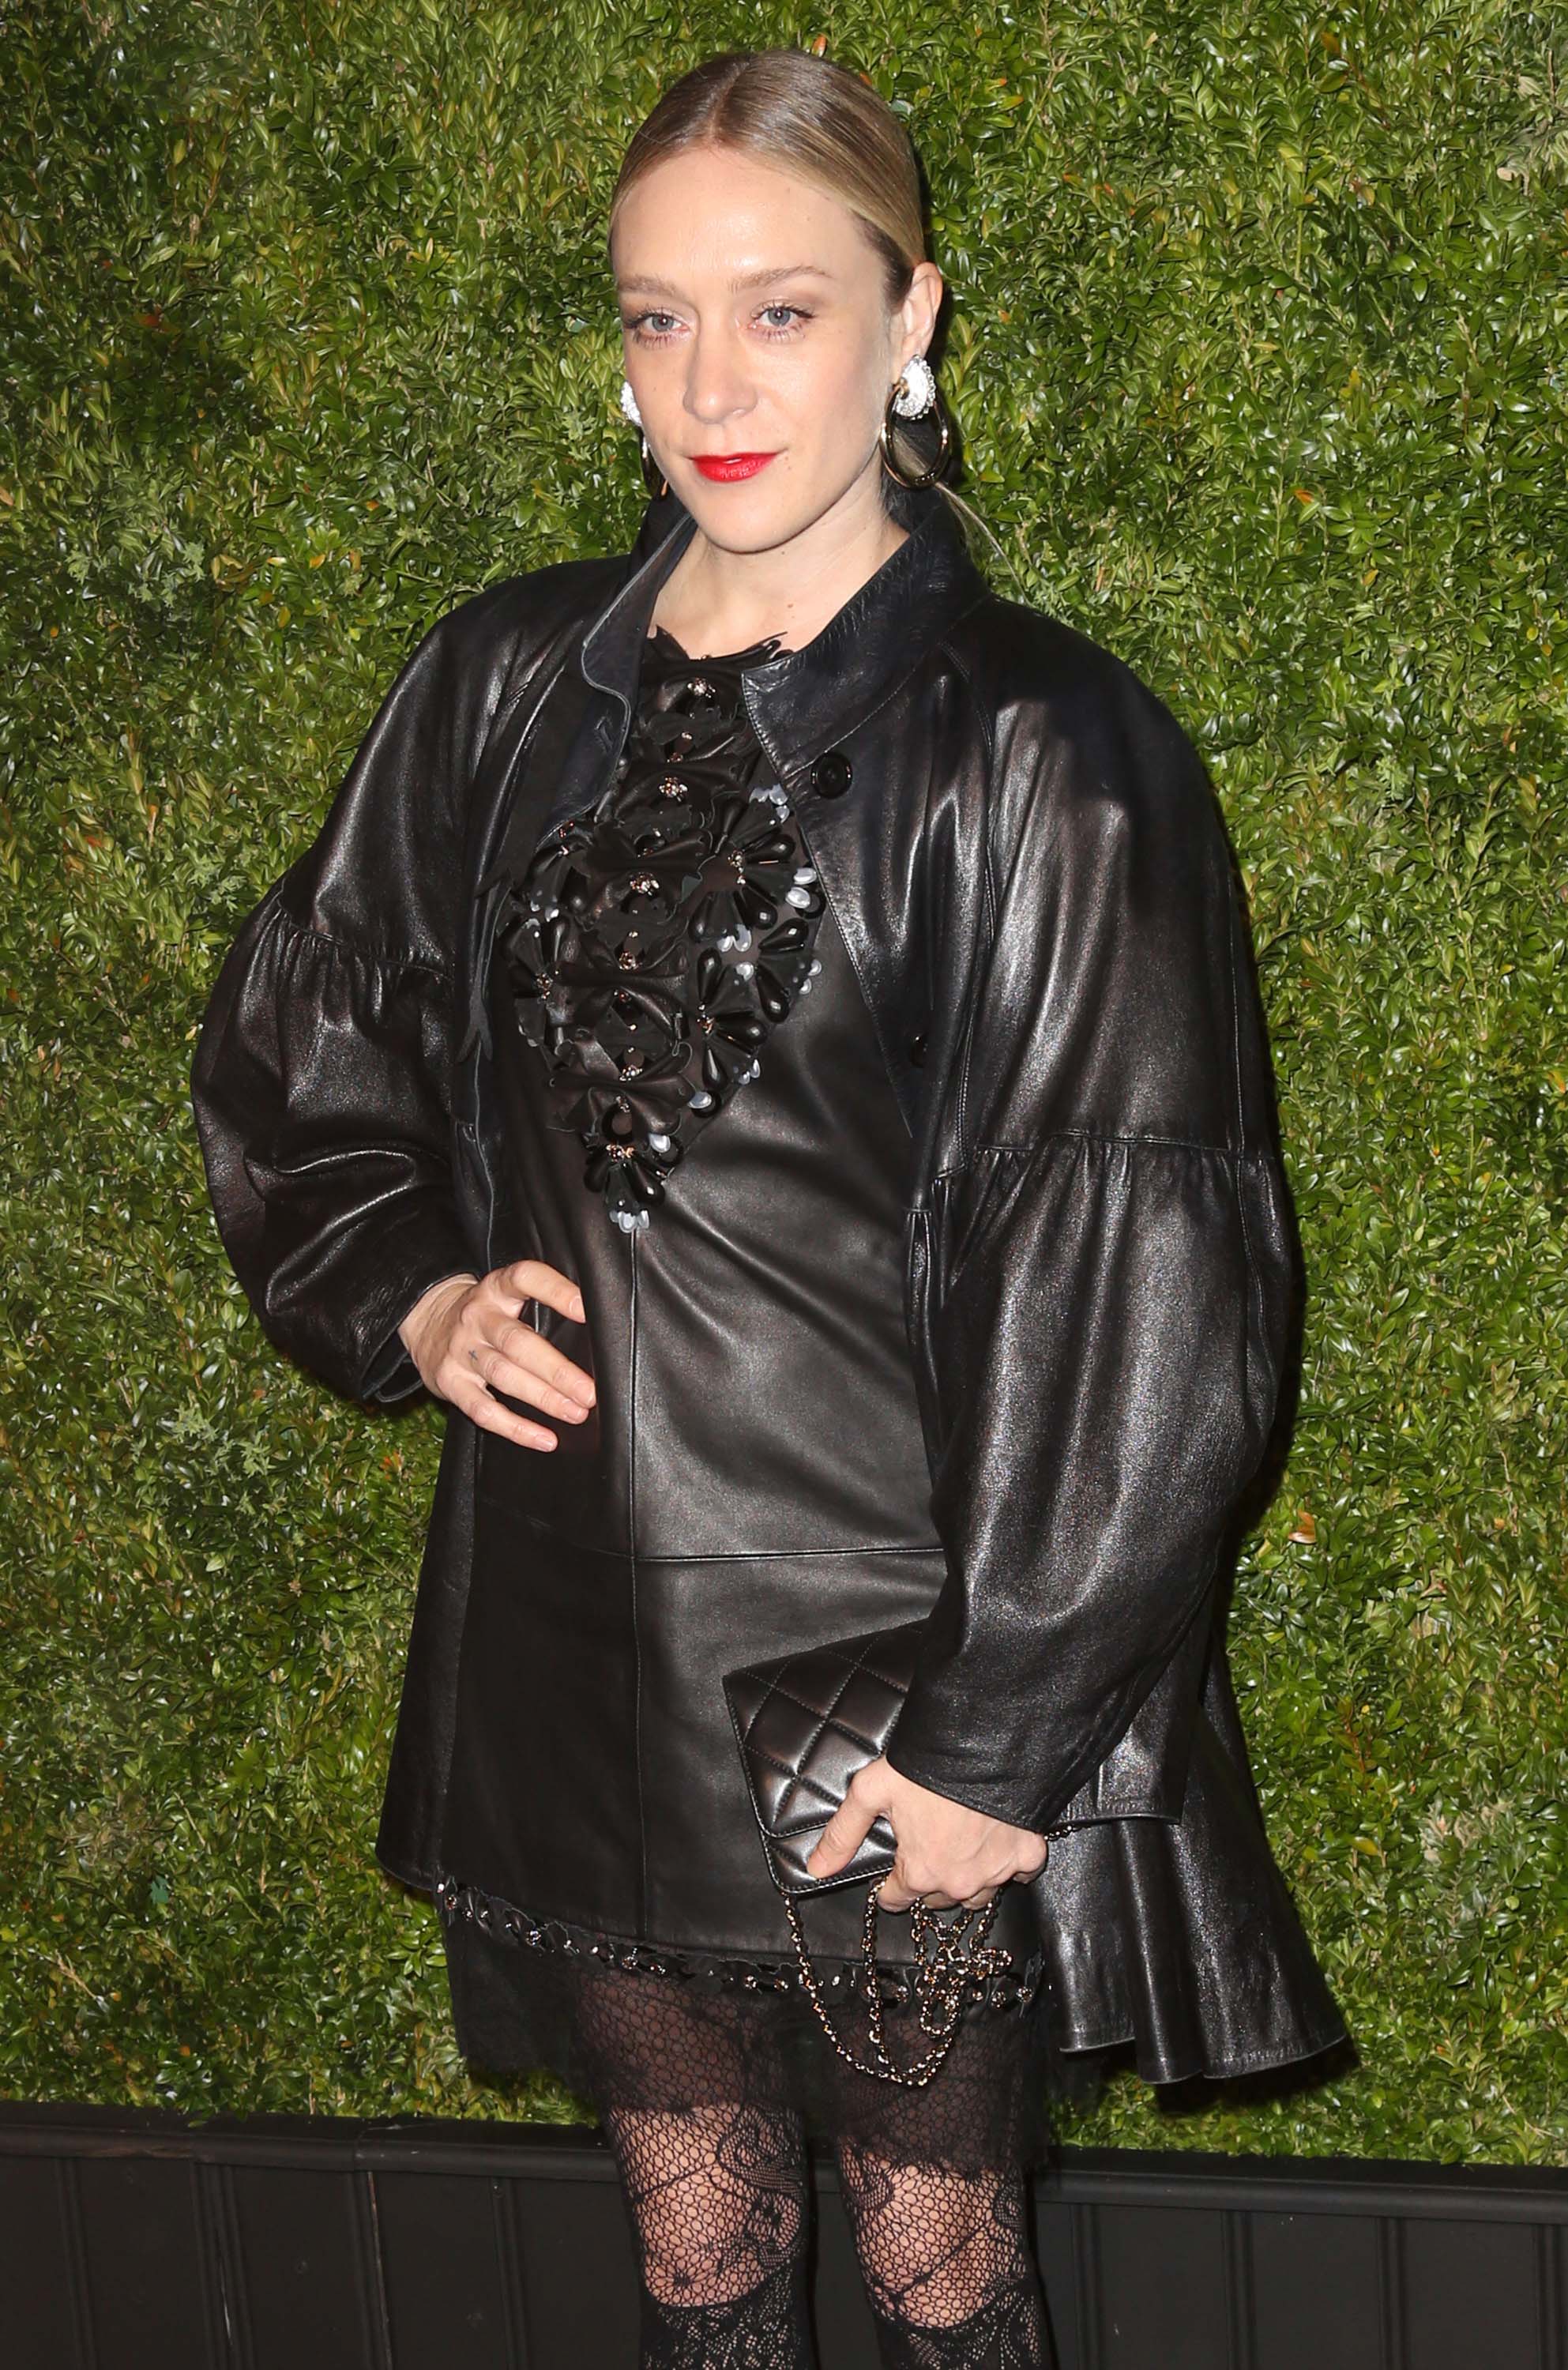 Chloe Sevigny attends 11th Annual Chanel Tribeca Film Festival Artists Dinner